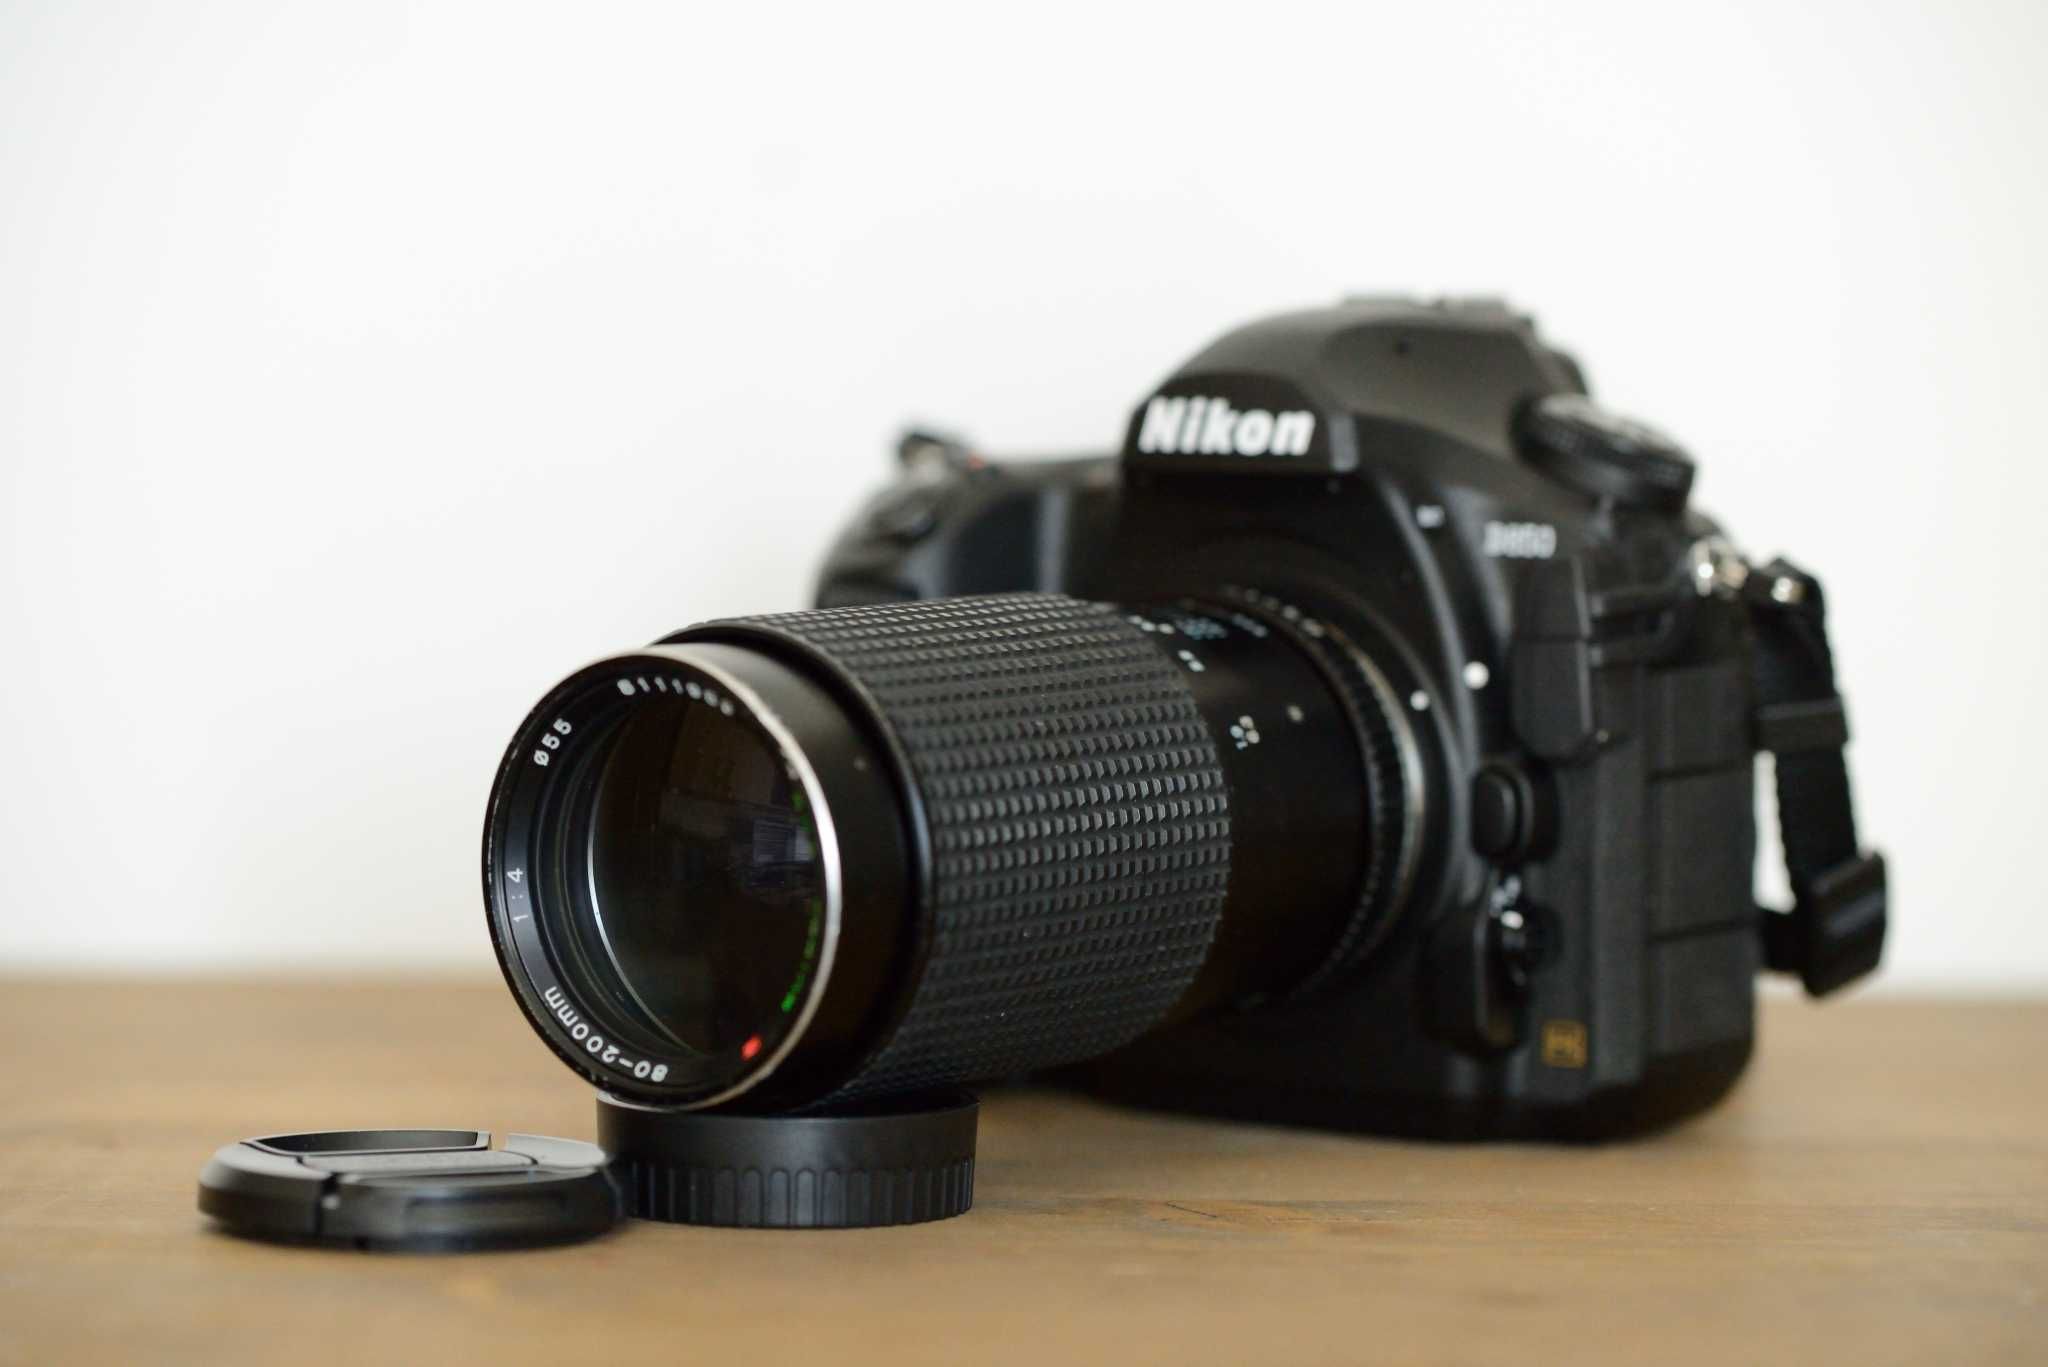 Obiectiv Tokina 80-200mm F4 montura Nikon F